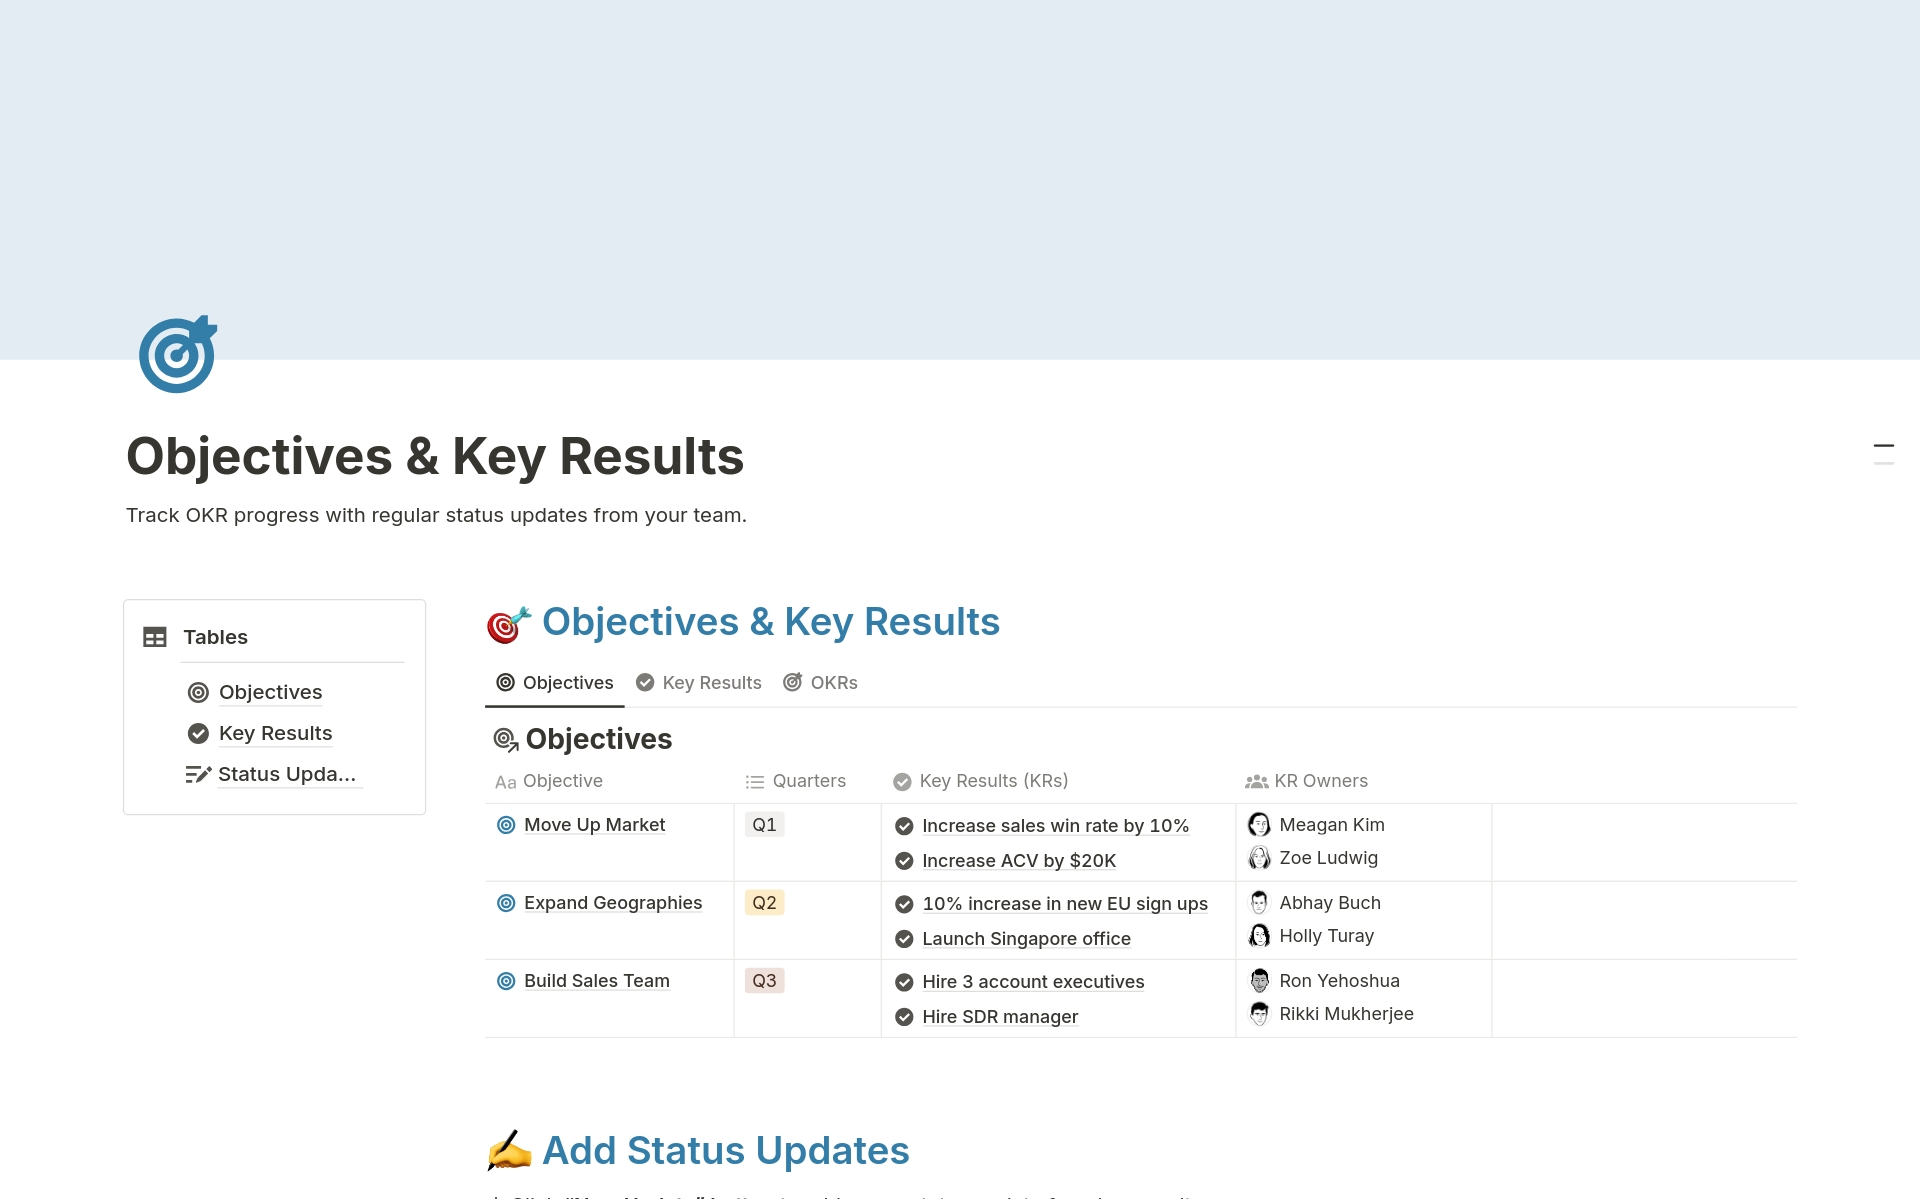 Vista previa de una plantilla para Objectives & Key Results